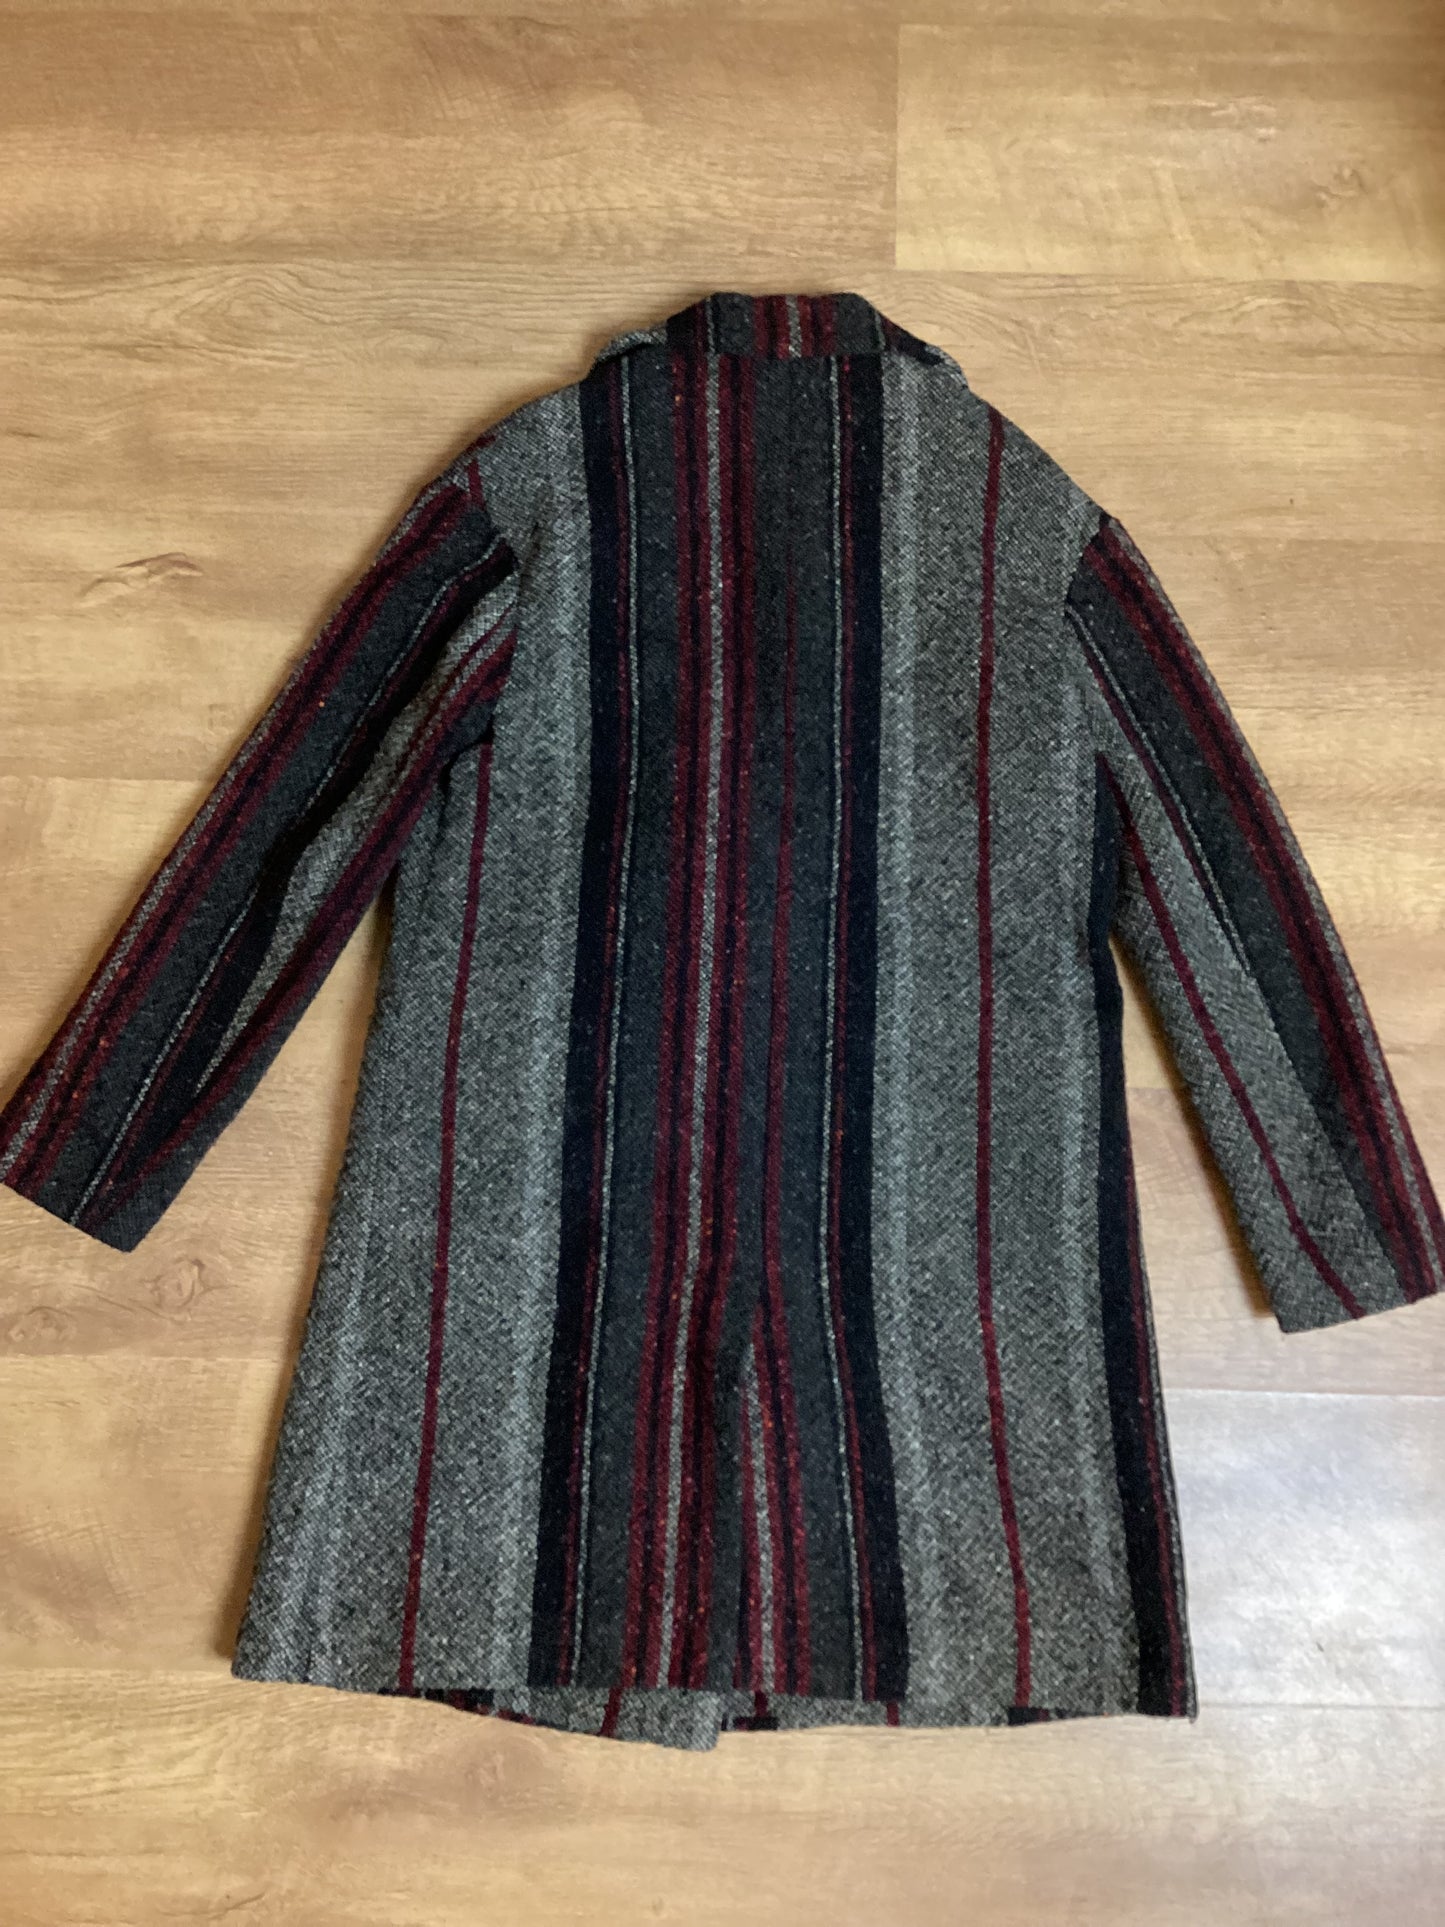 Swildens Striped Wool Blend Coat Size S (1)